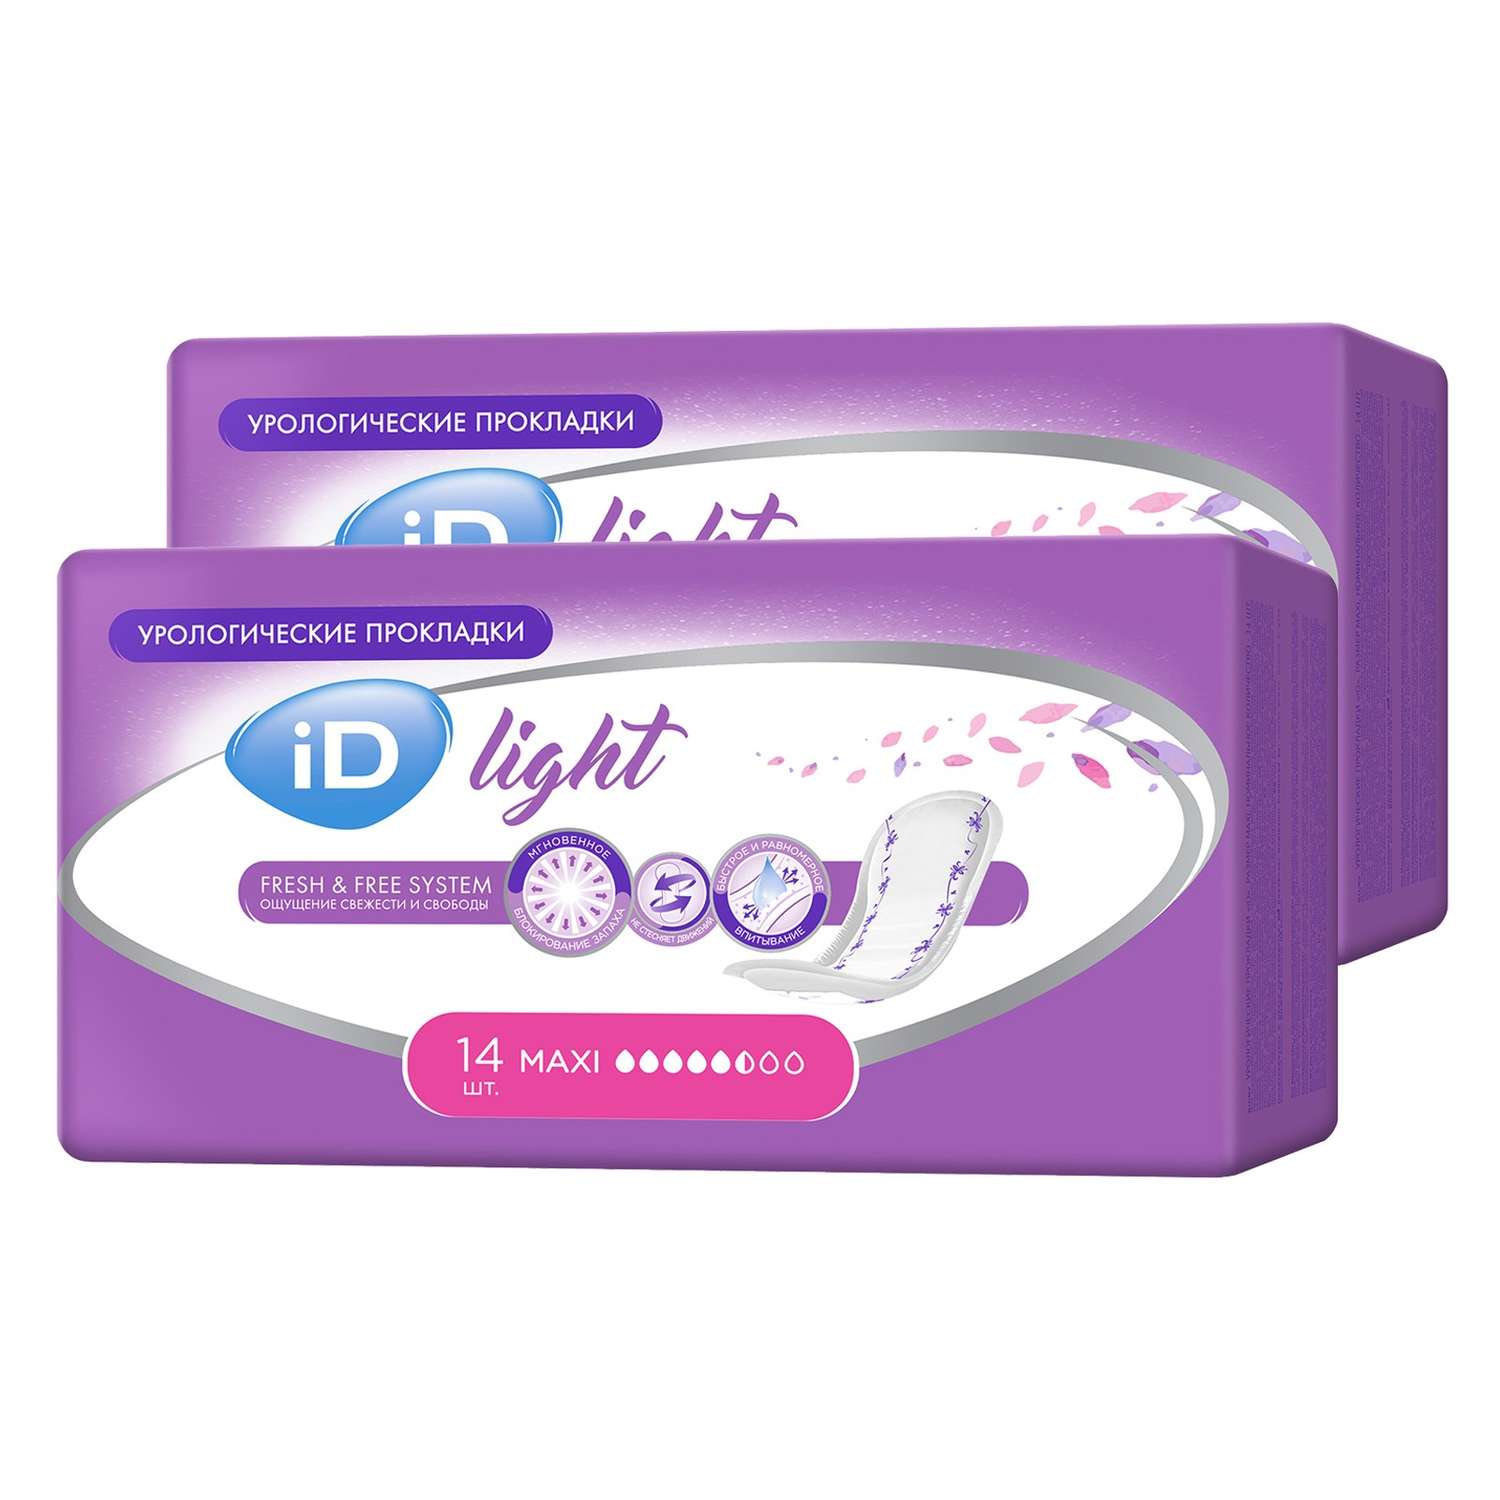 Прокладки урологические iD LIGHT Maxi 14 шт. х2 упаковки - фото 2